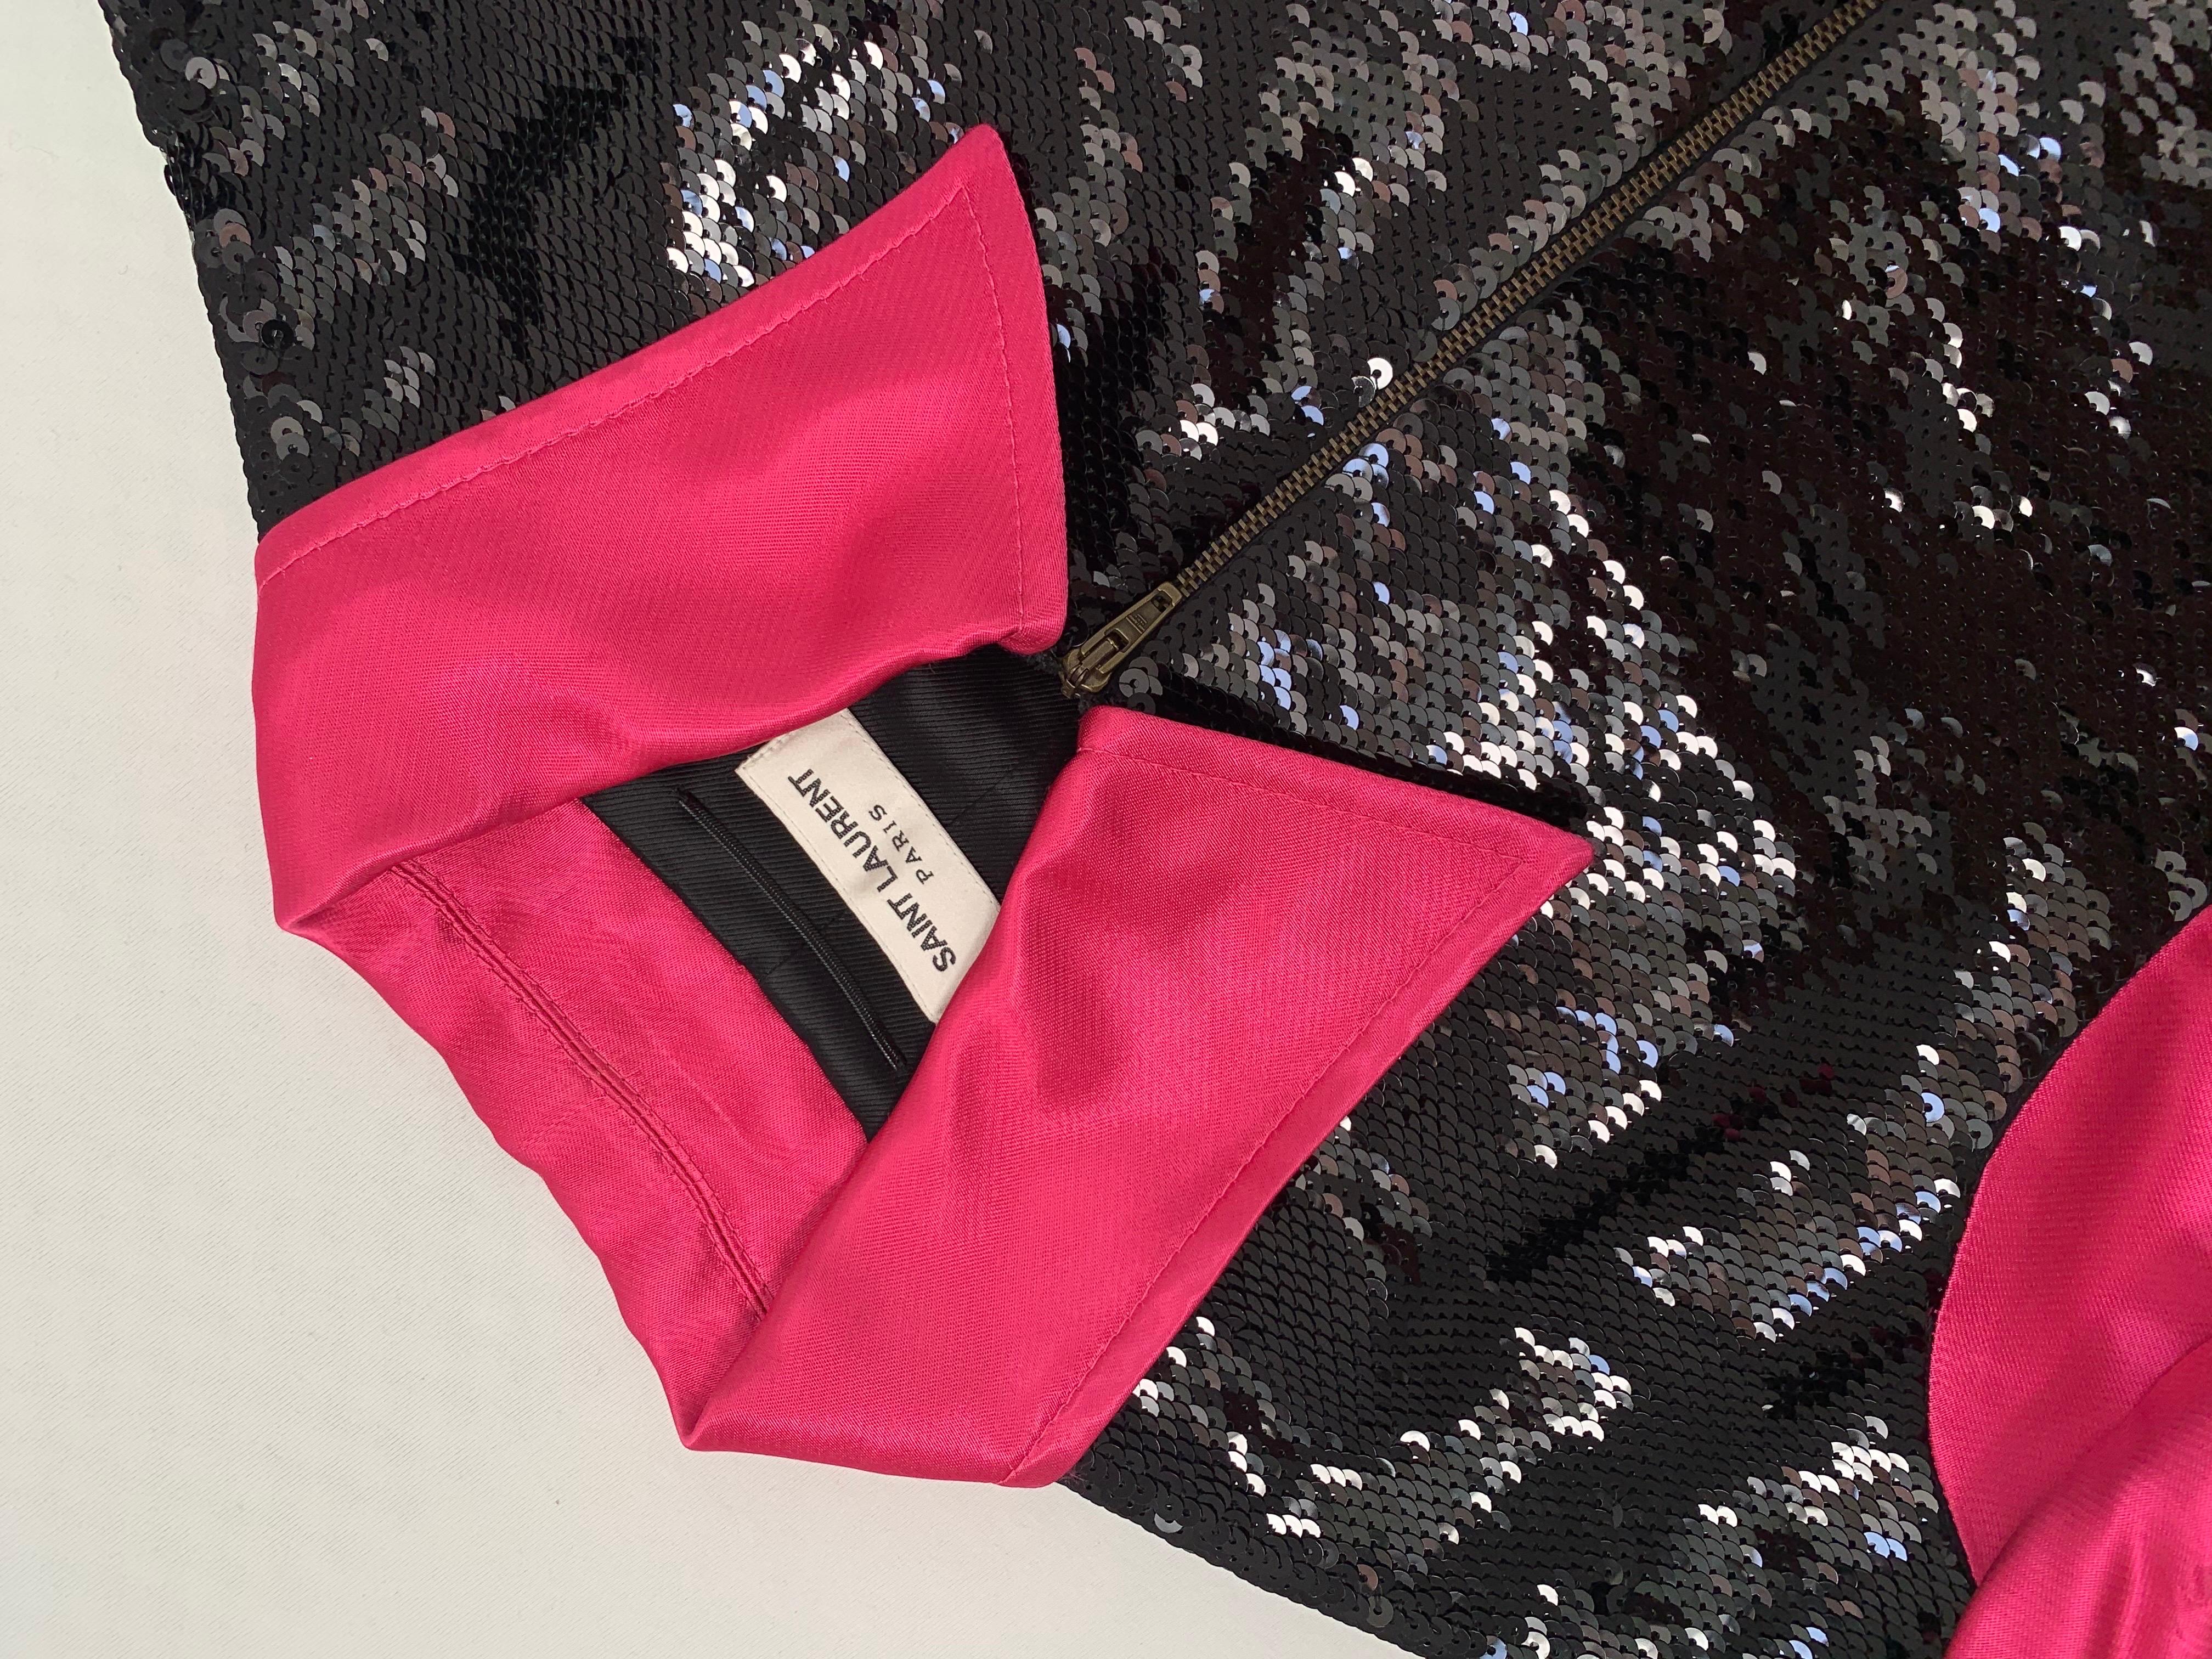 Saint Laurent Paris by Hedi Slimane FW2016 1/1 sample sequin jacket pink  For Sale 3